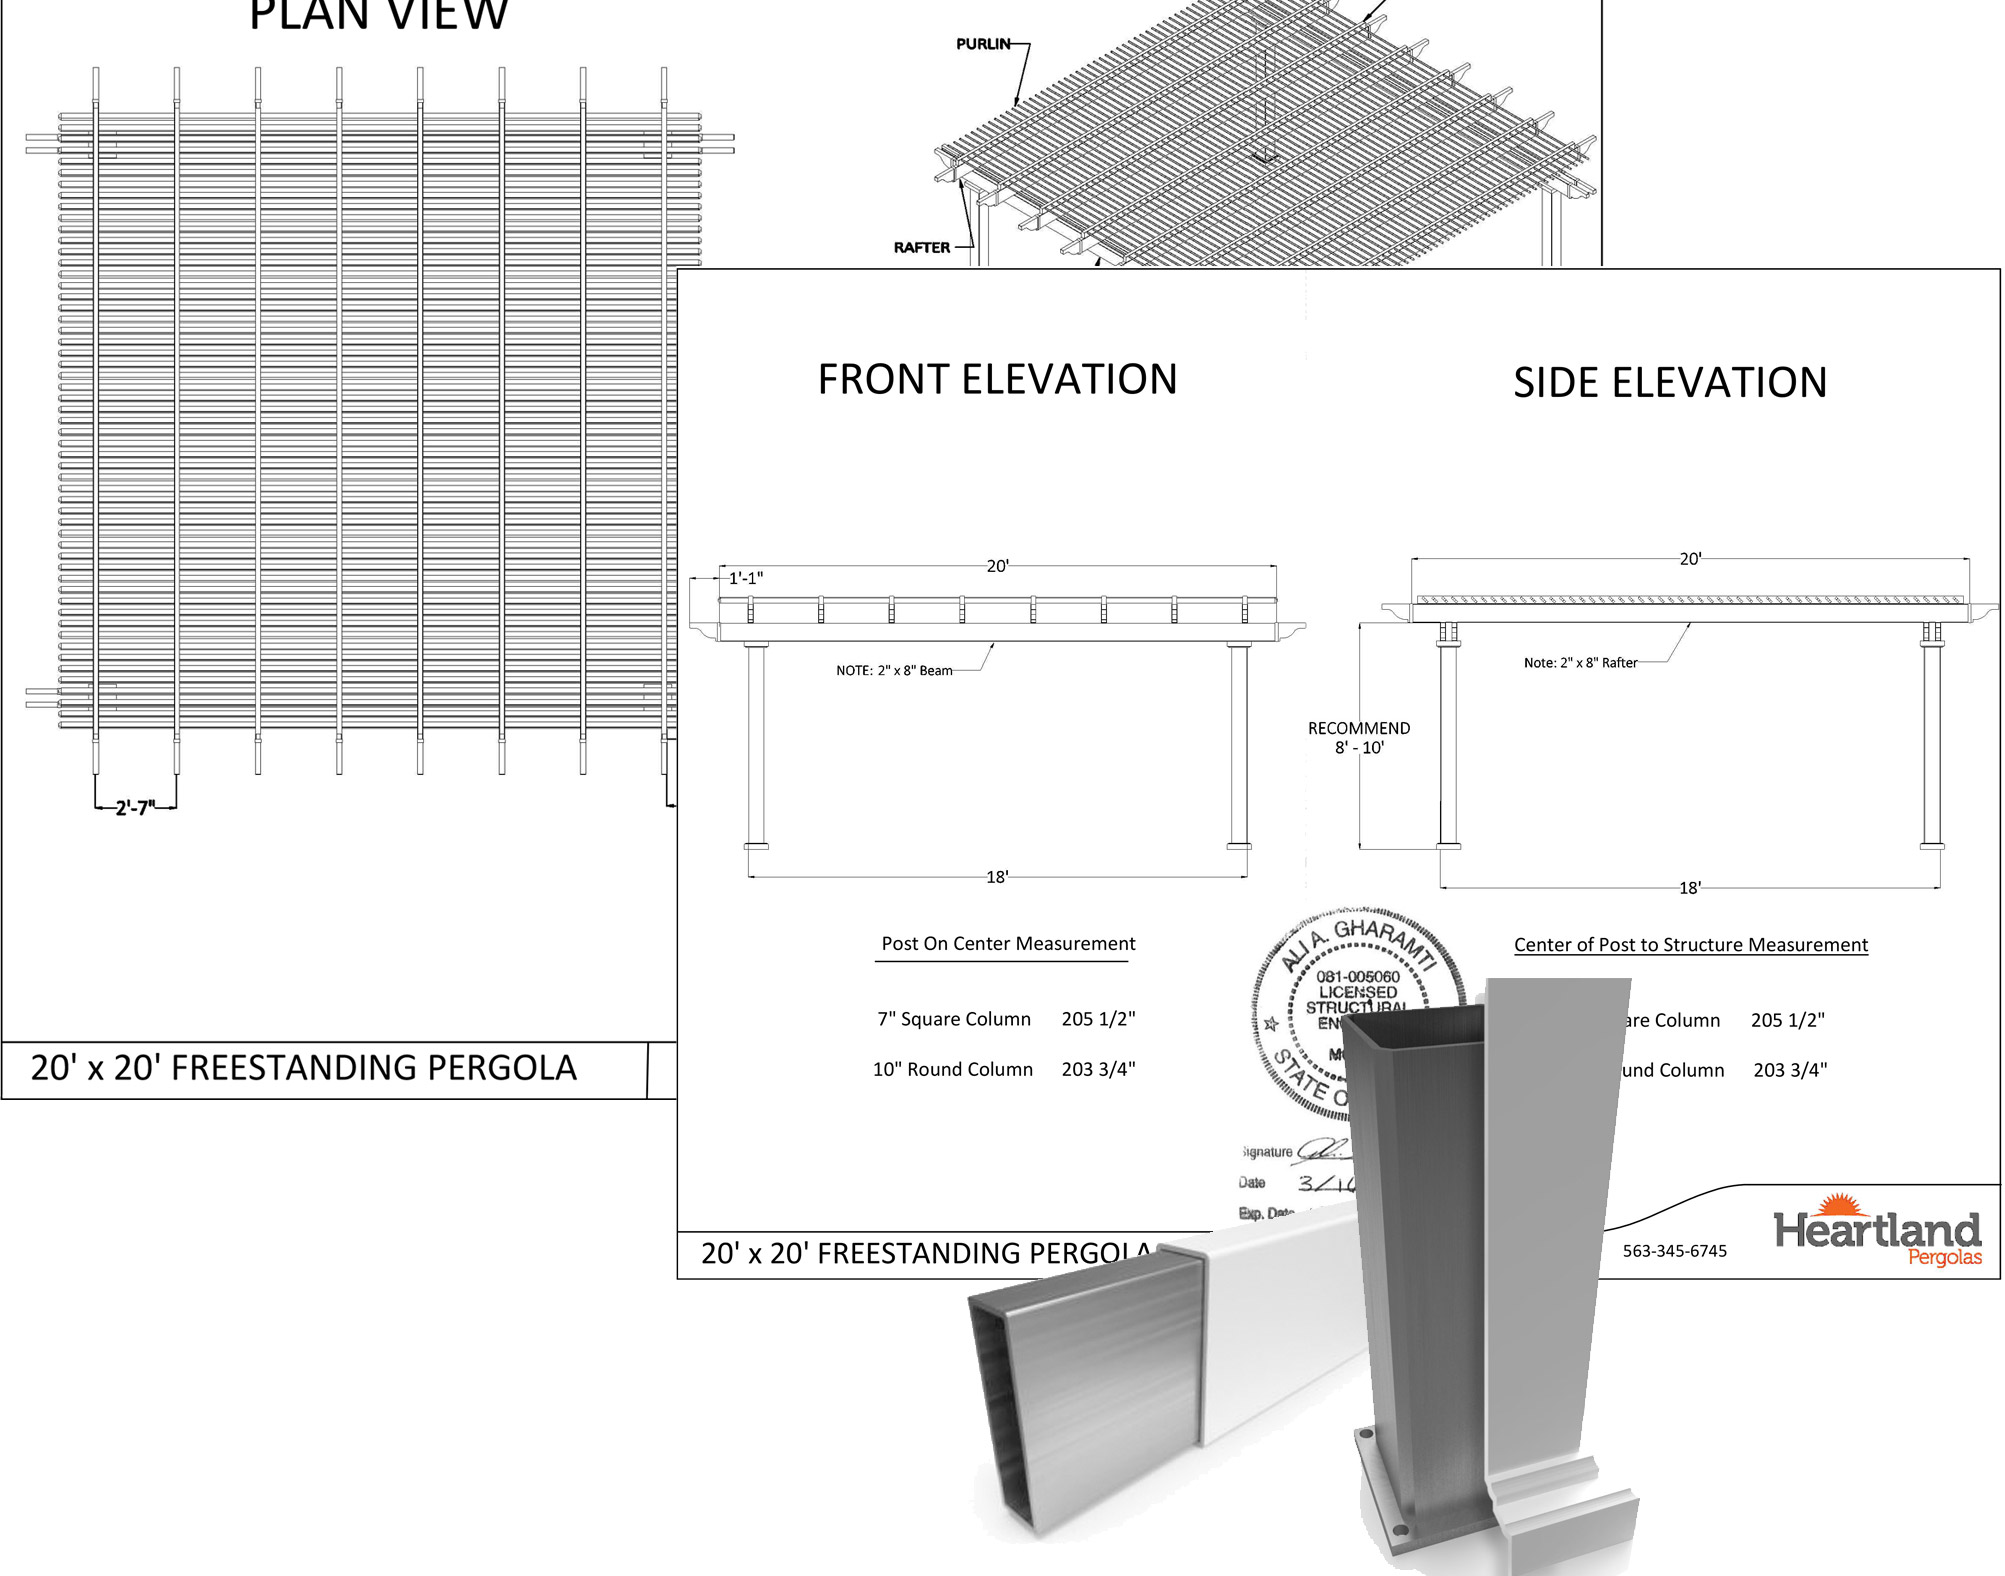 Sample plans and interior aluminum structure view of Heartland Pergolas